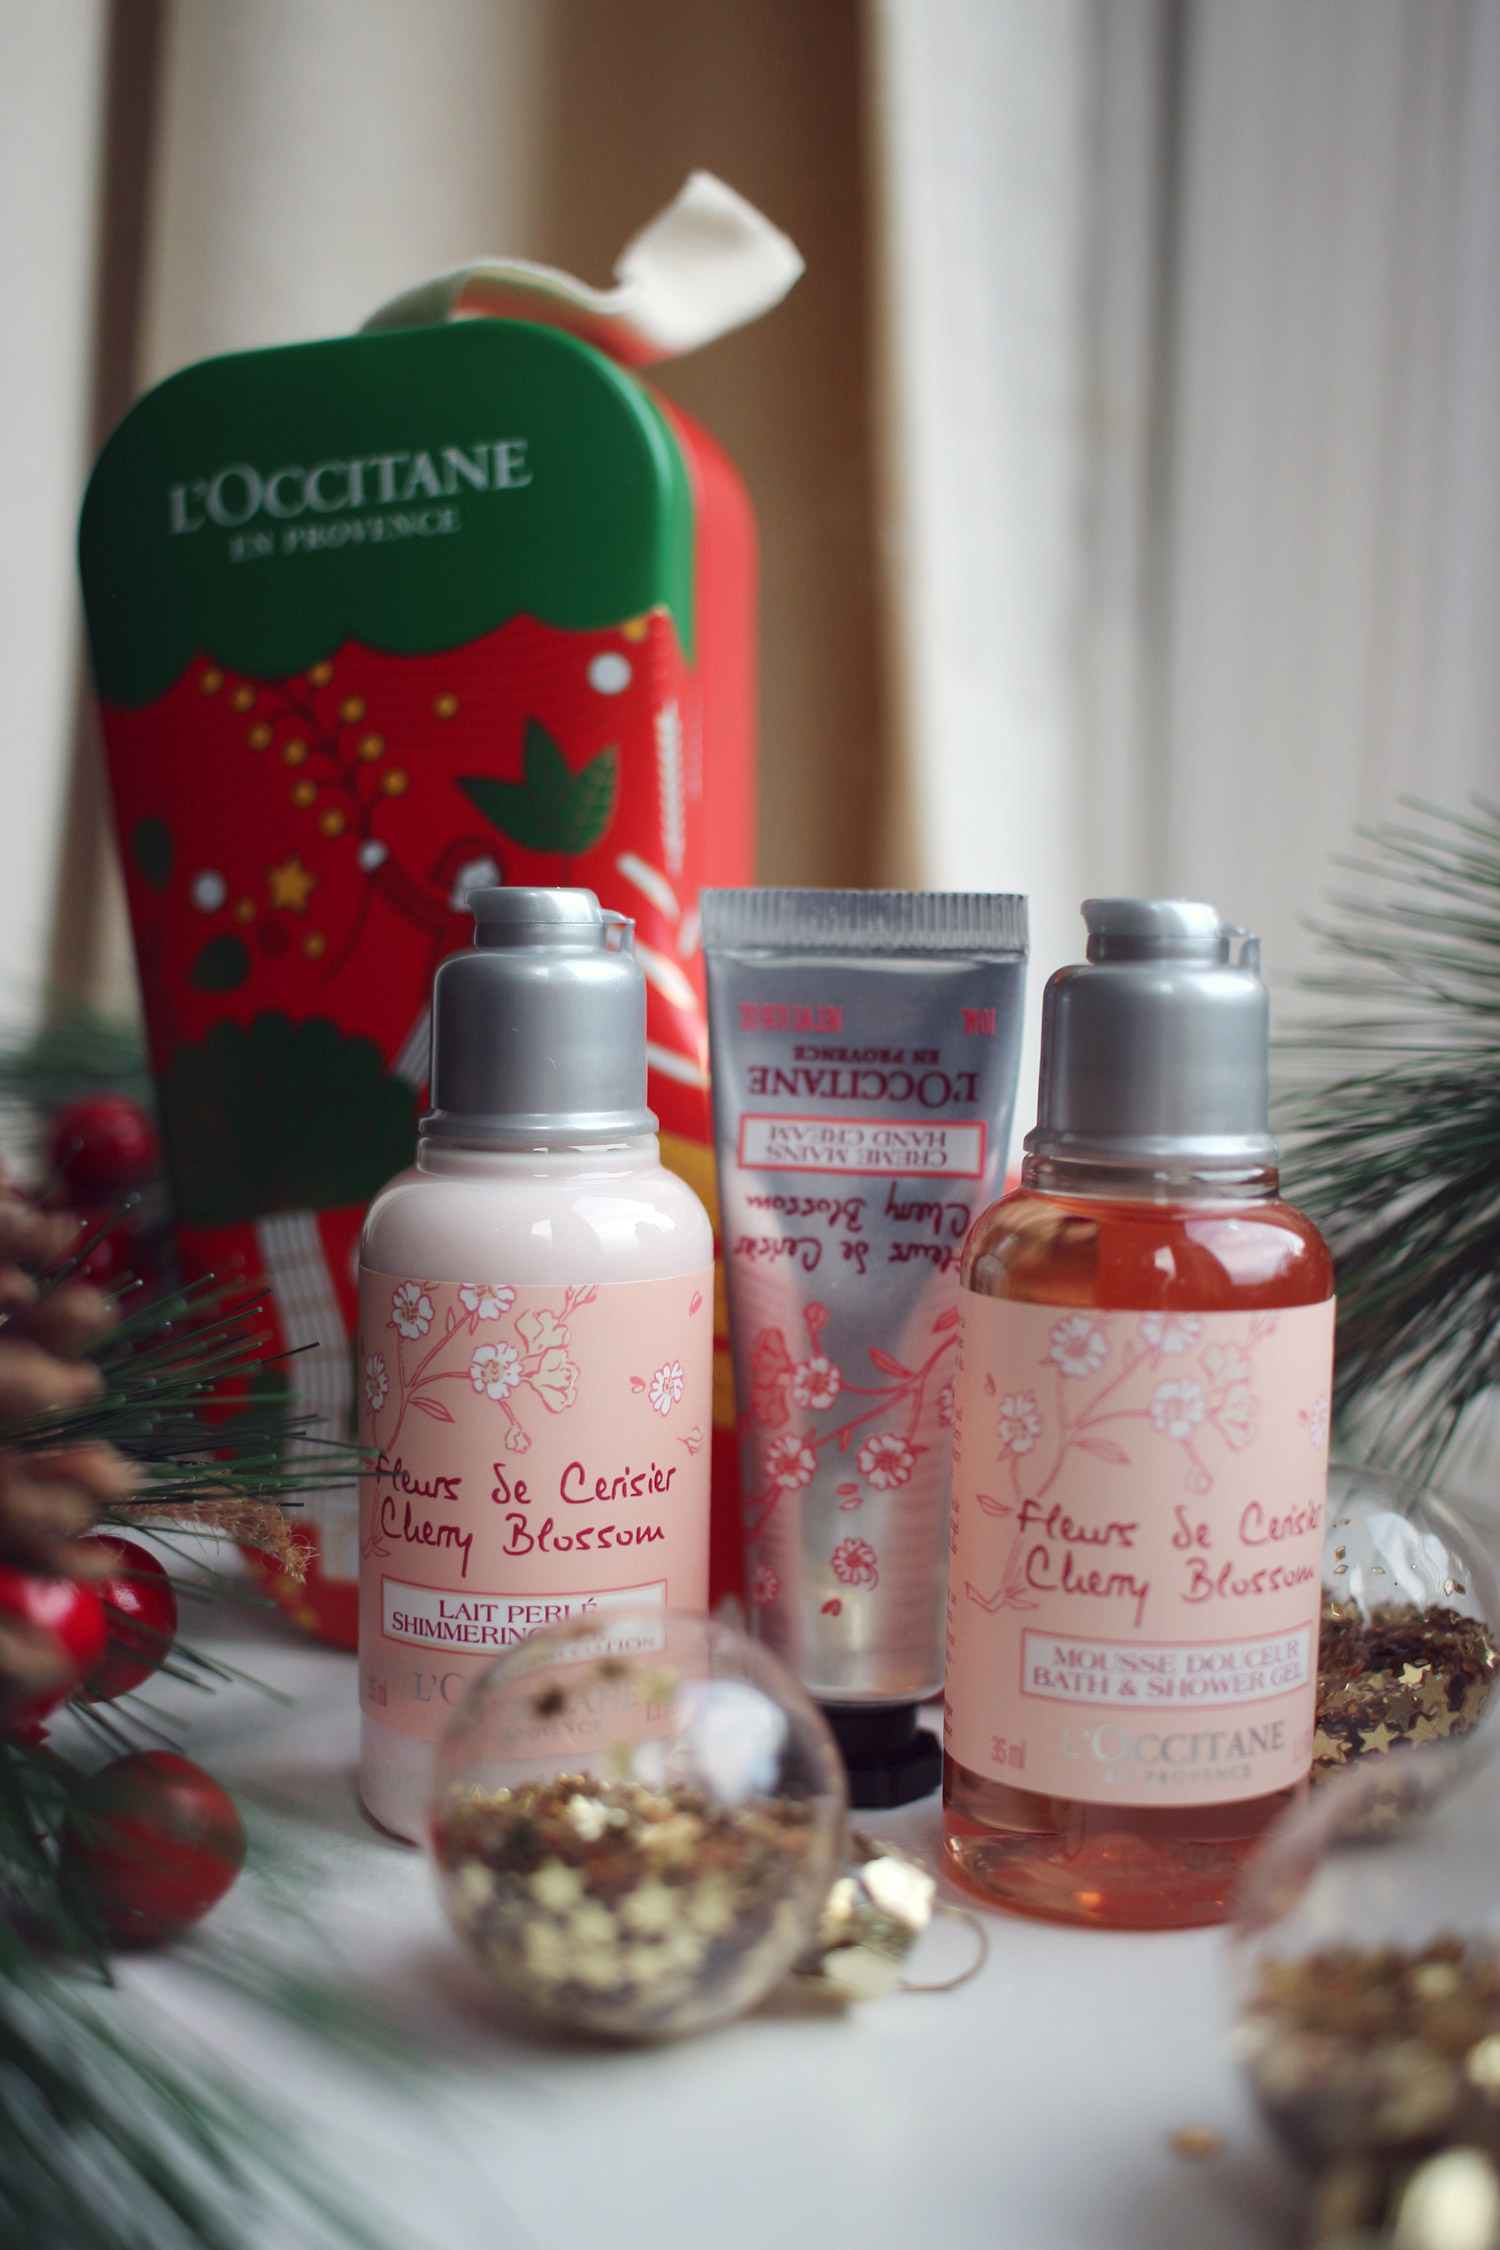 loccitane-cherry-blossom-gift-set-christmas-2